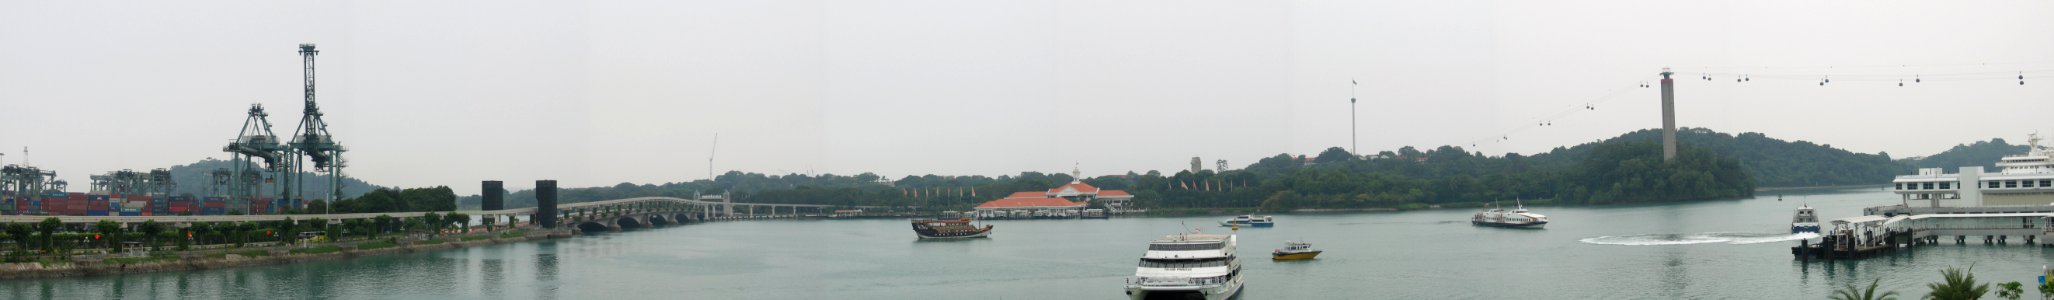 Sentosa and Cruise Bay, Singapore, panorama, Nov 06 photo